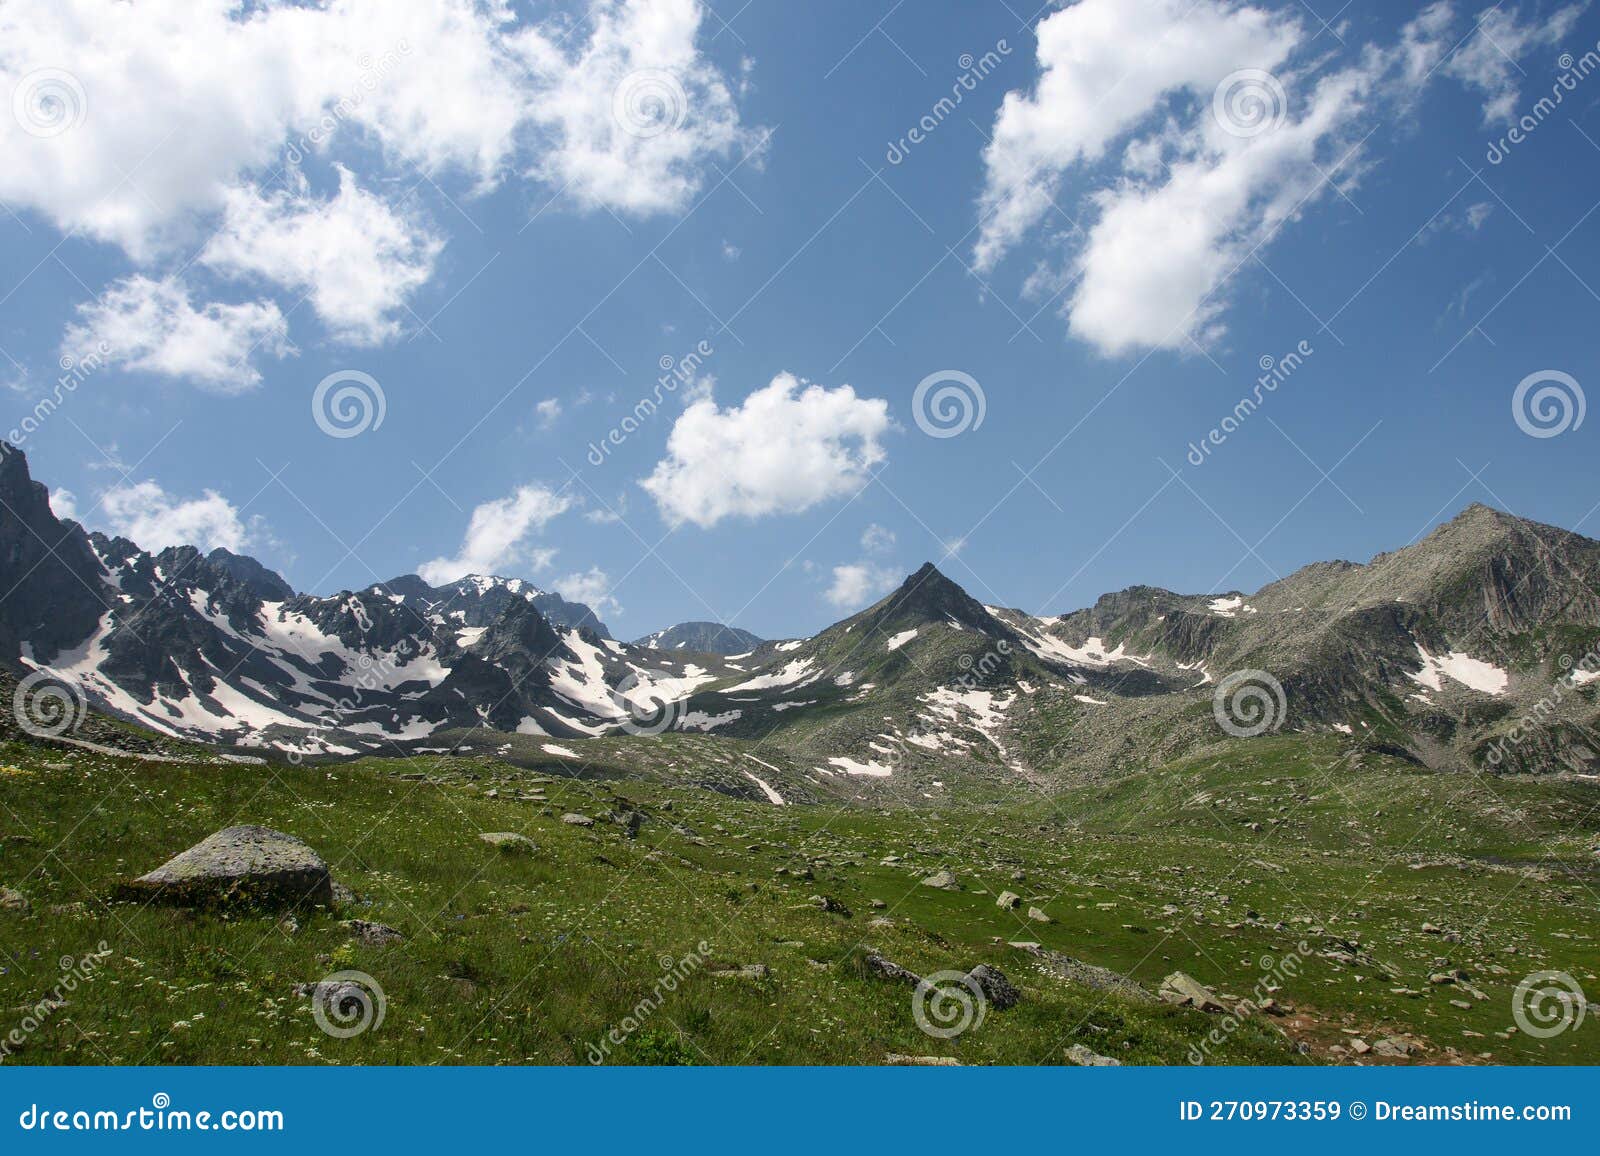 Kackar Mountains - Rize stock image. Image of rize, alps - 270973359